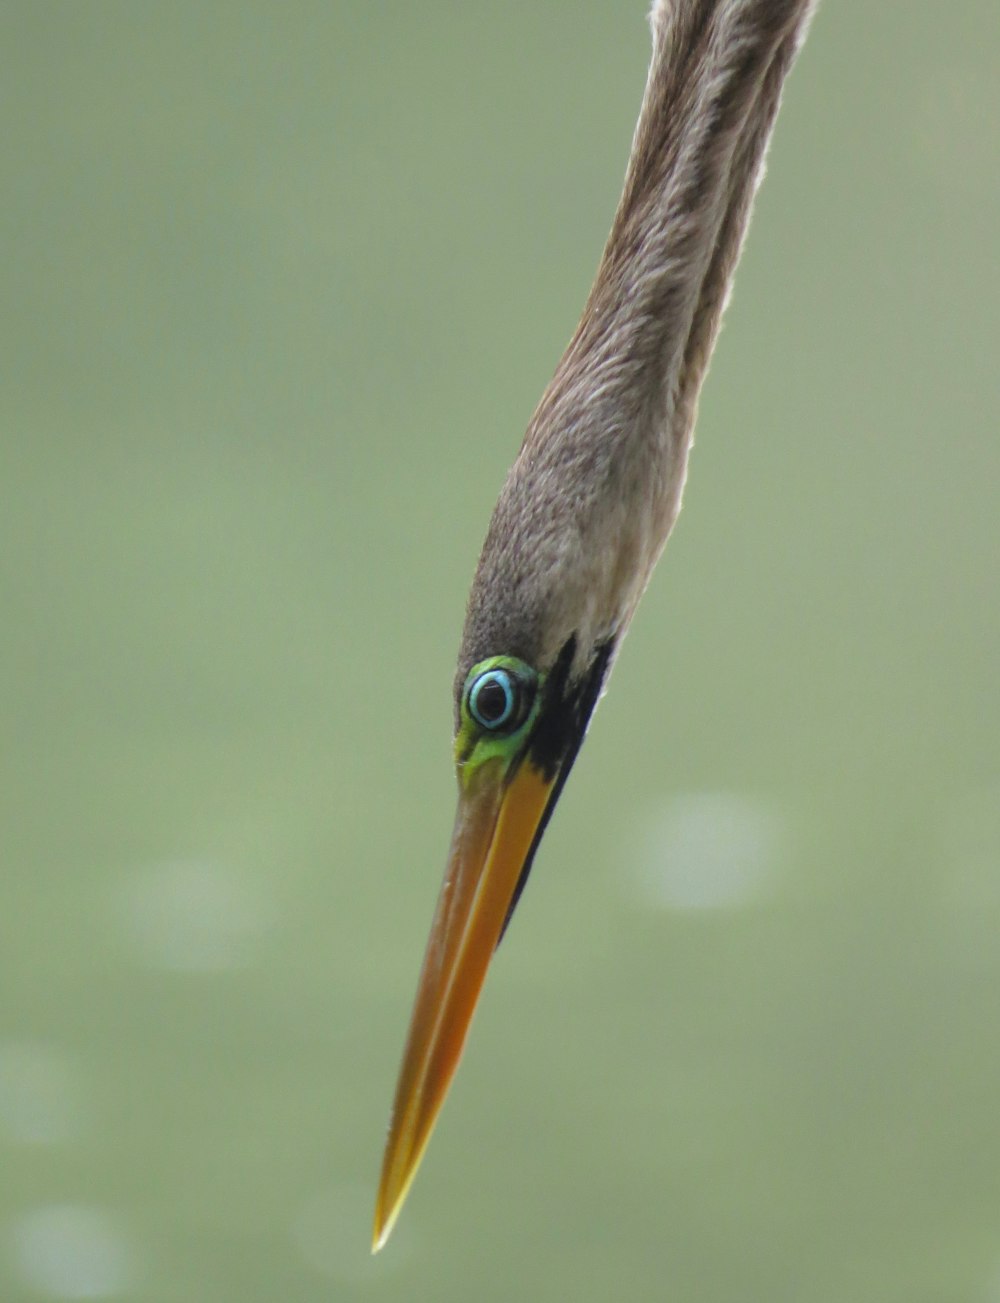 brown long beak bird in close up photography